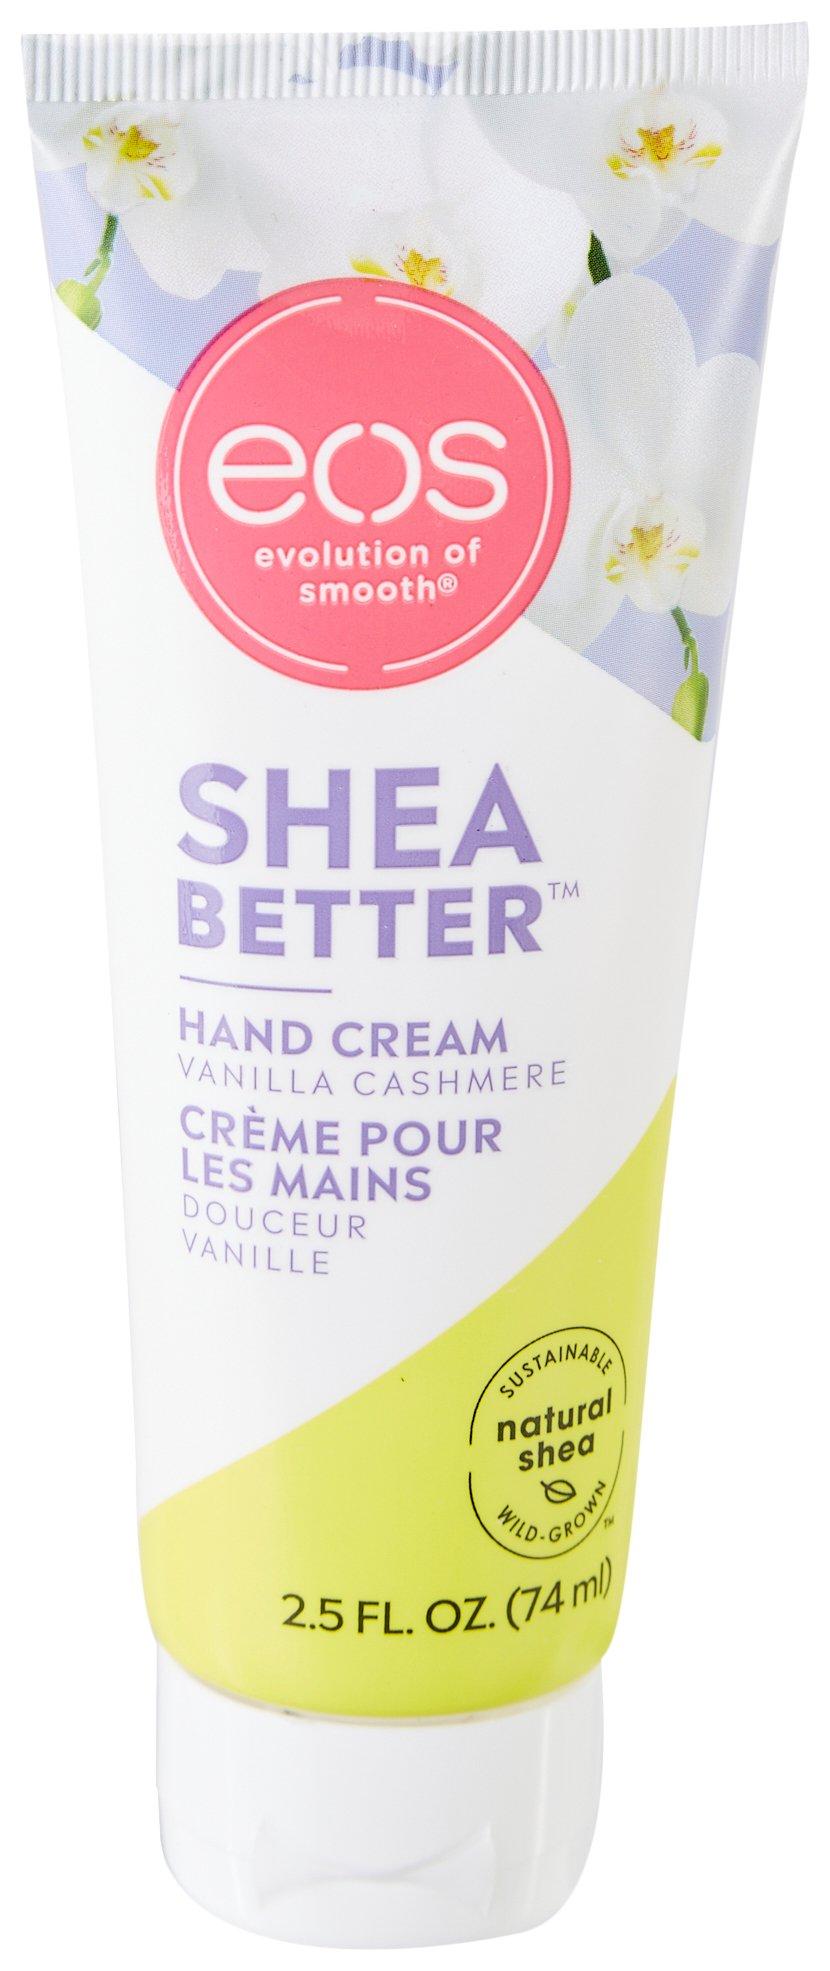 Shea Better Vanilla Cashmere Hand Cream